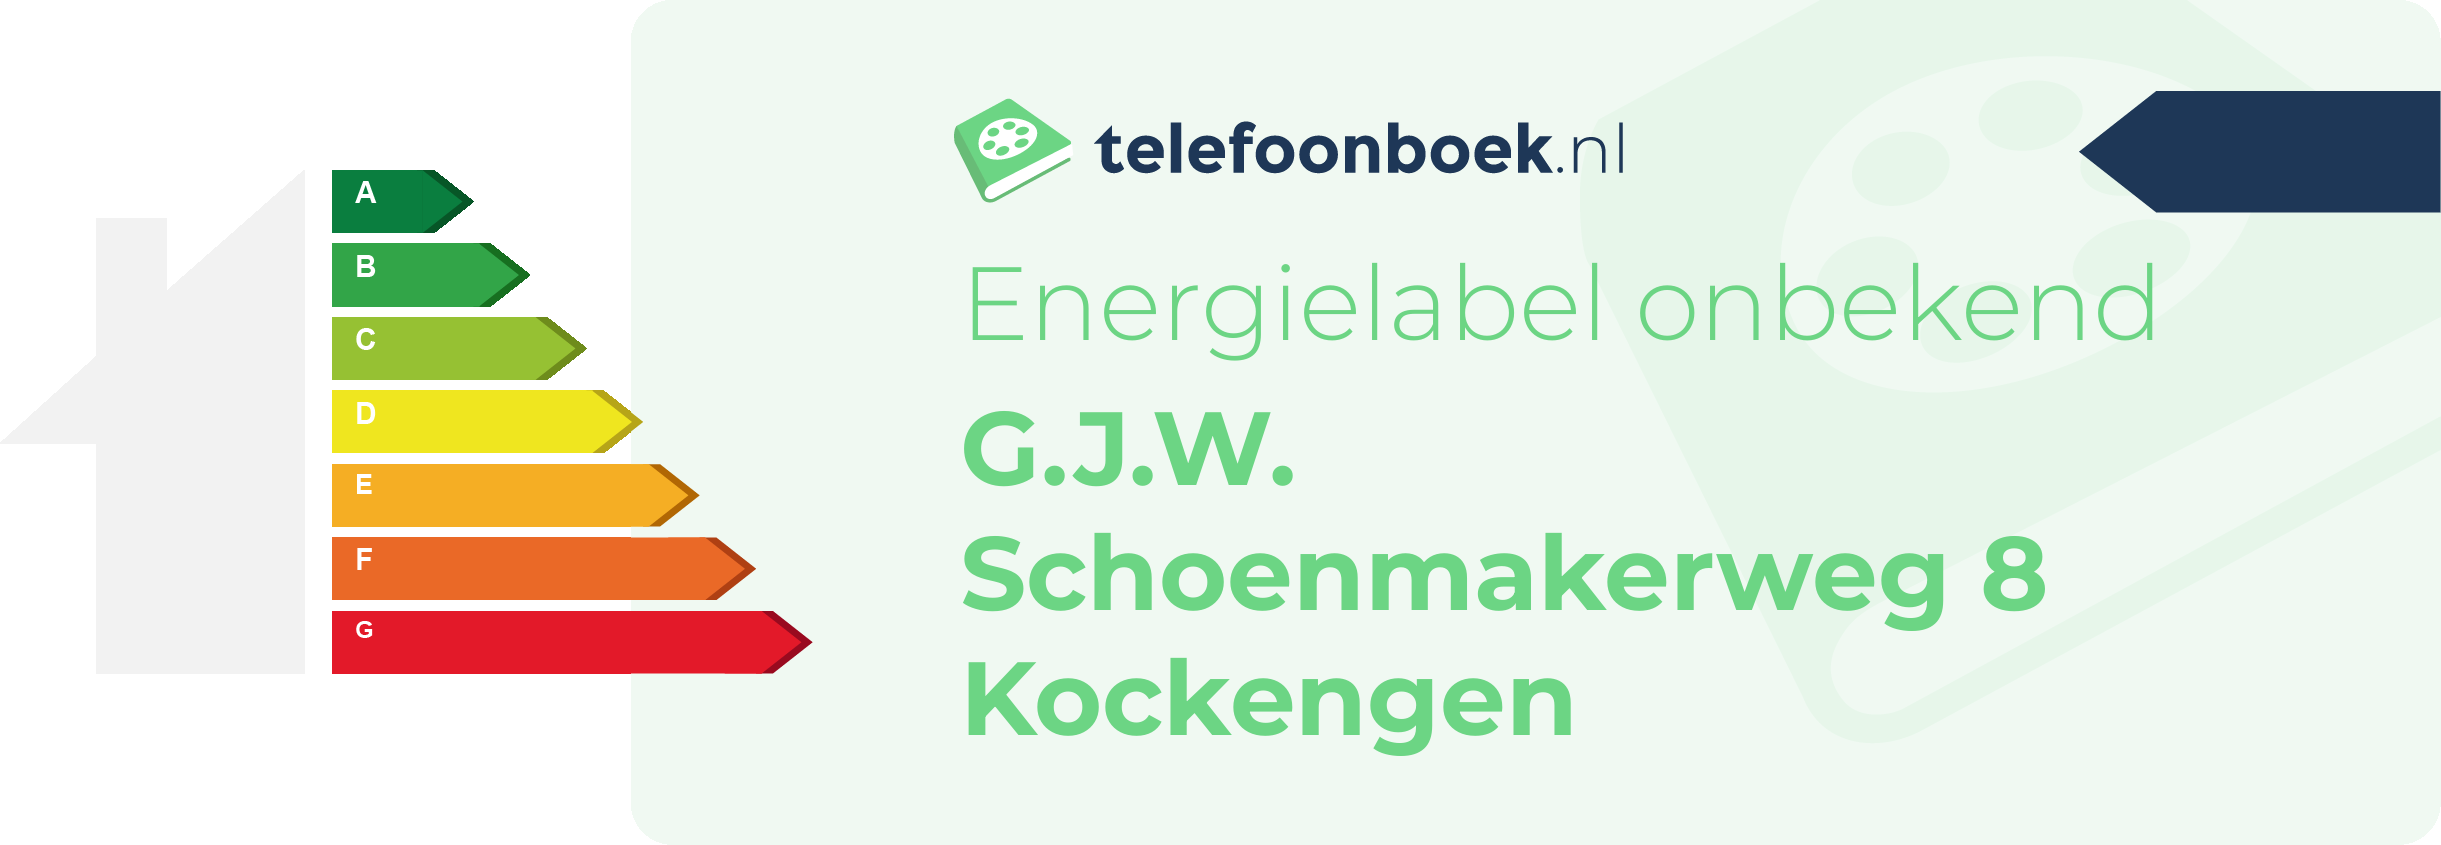 Energielabel G.J.W. Schoenmakerweg 8 Kockengen